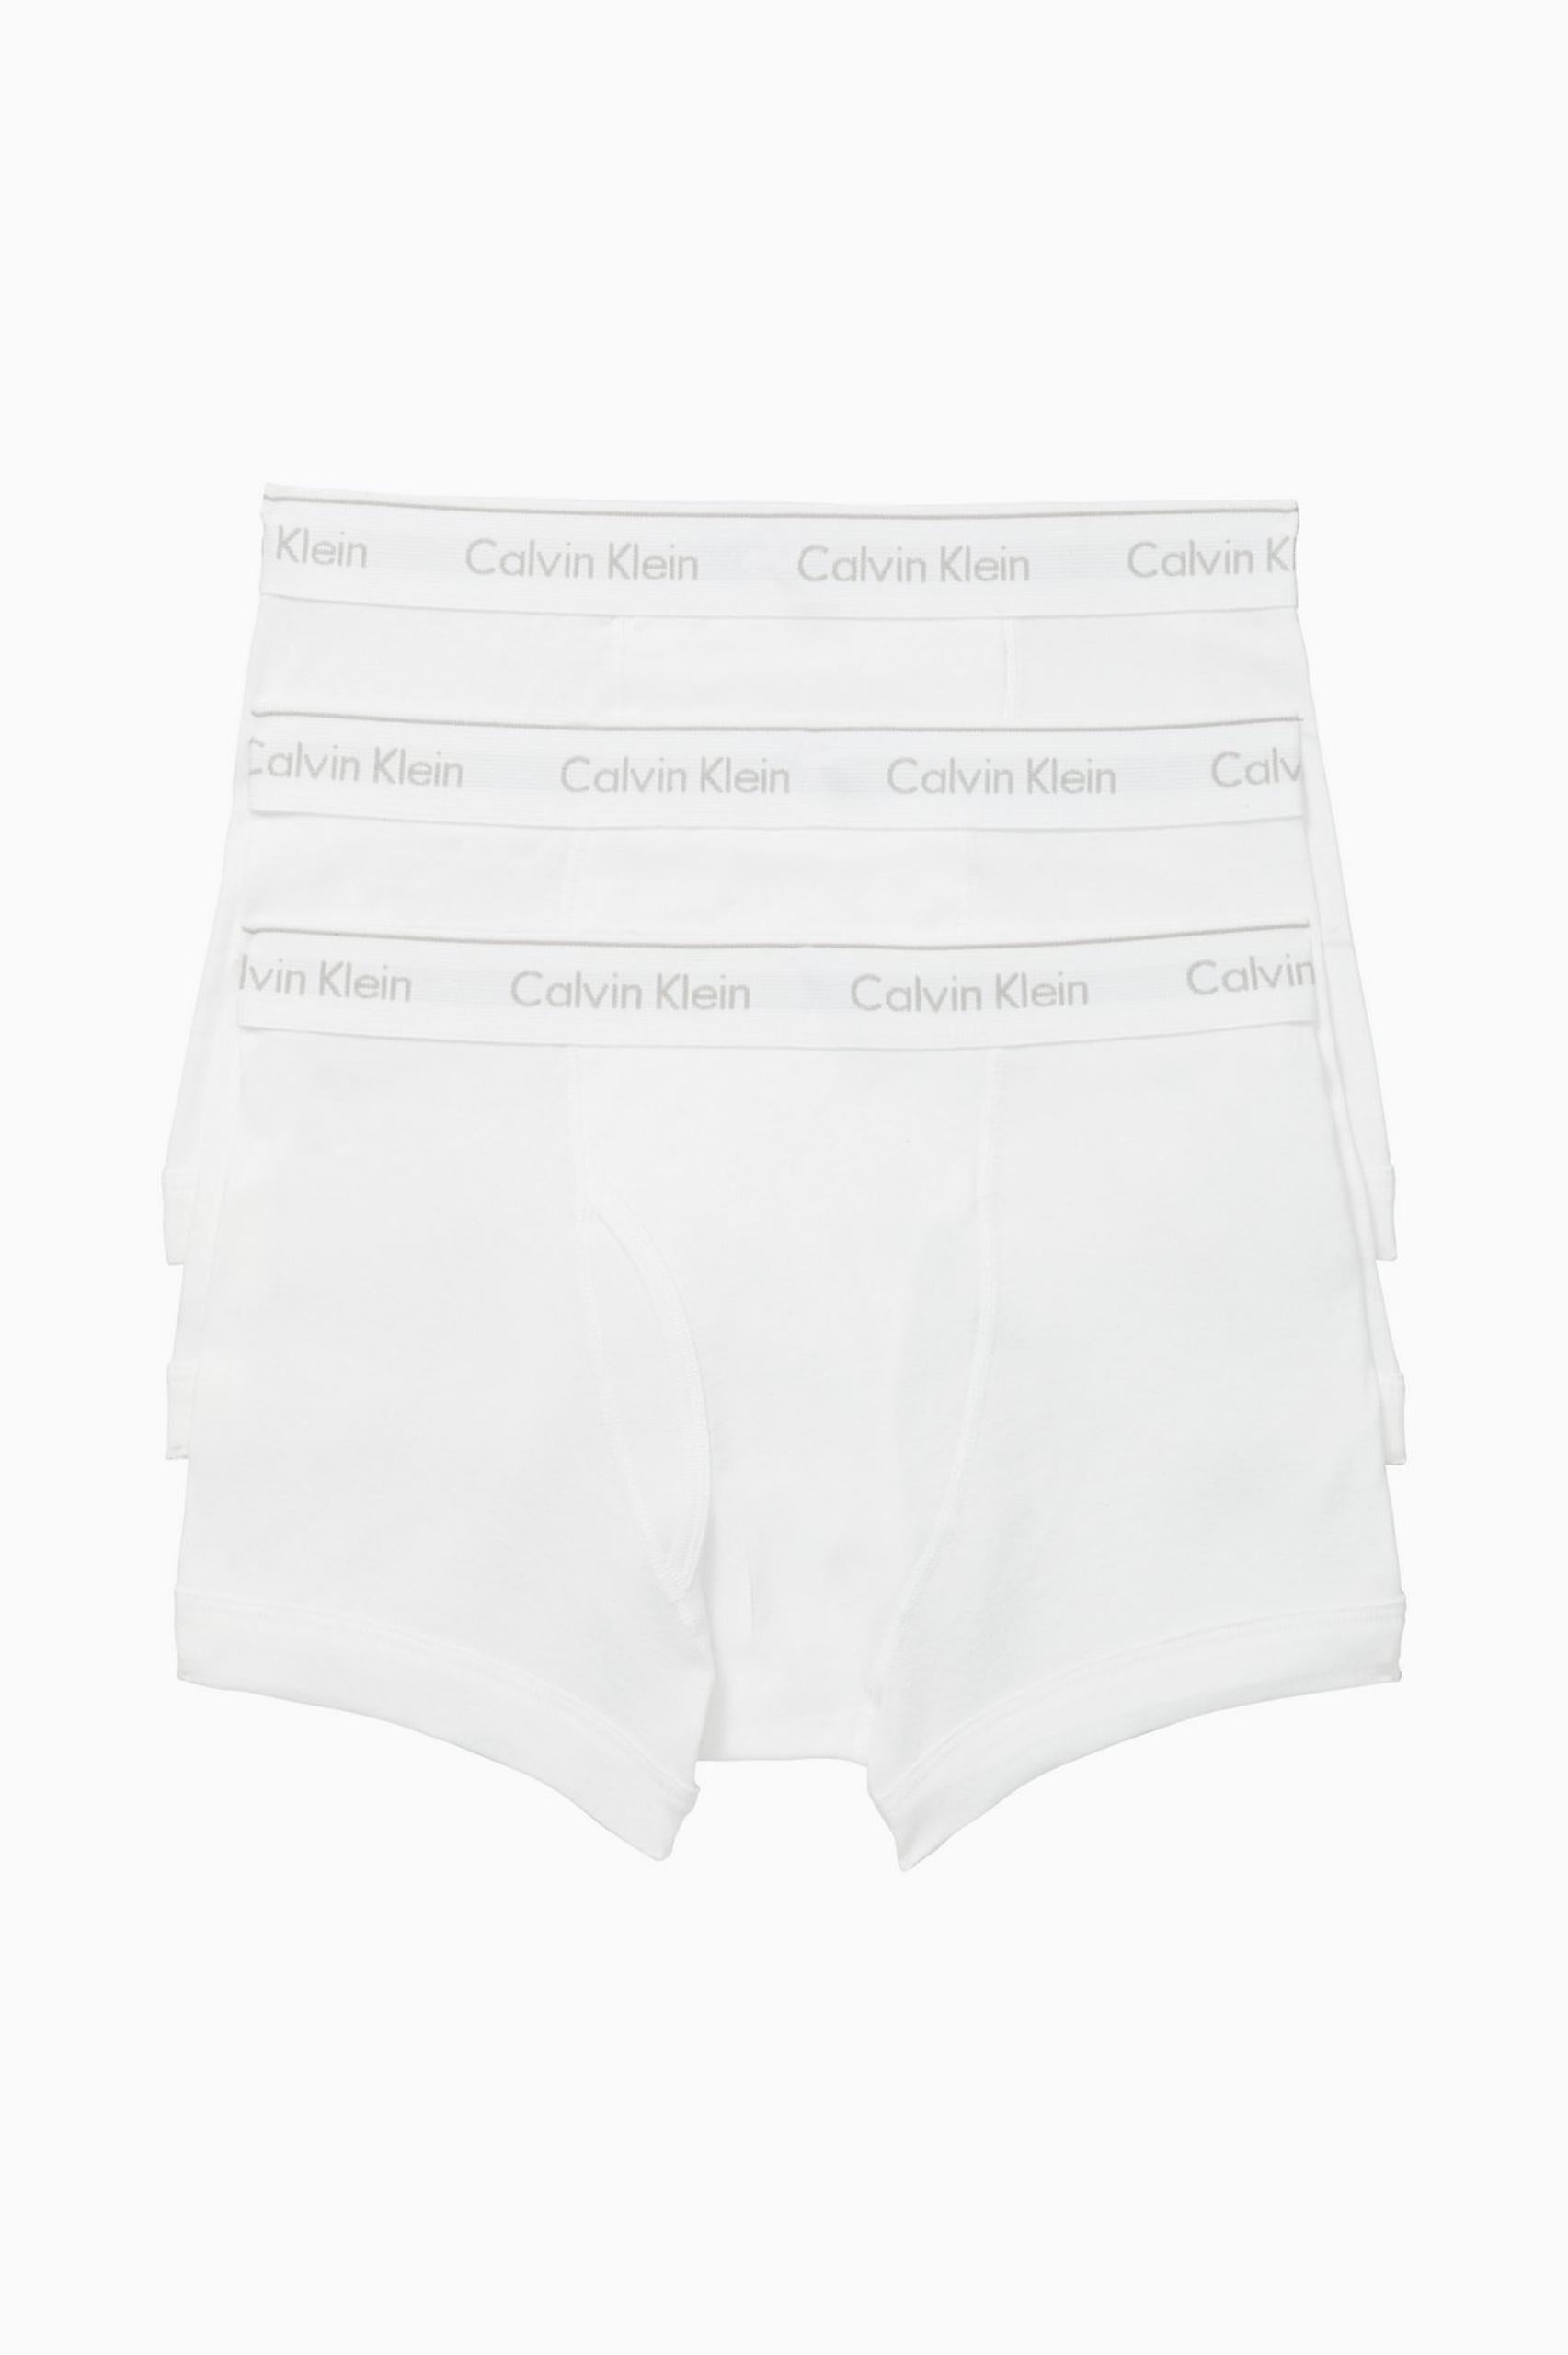 Calvin Klein Cotton Classics 3 Pack Trunks